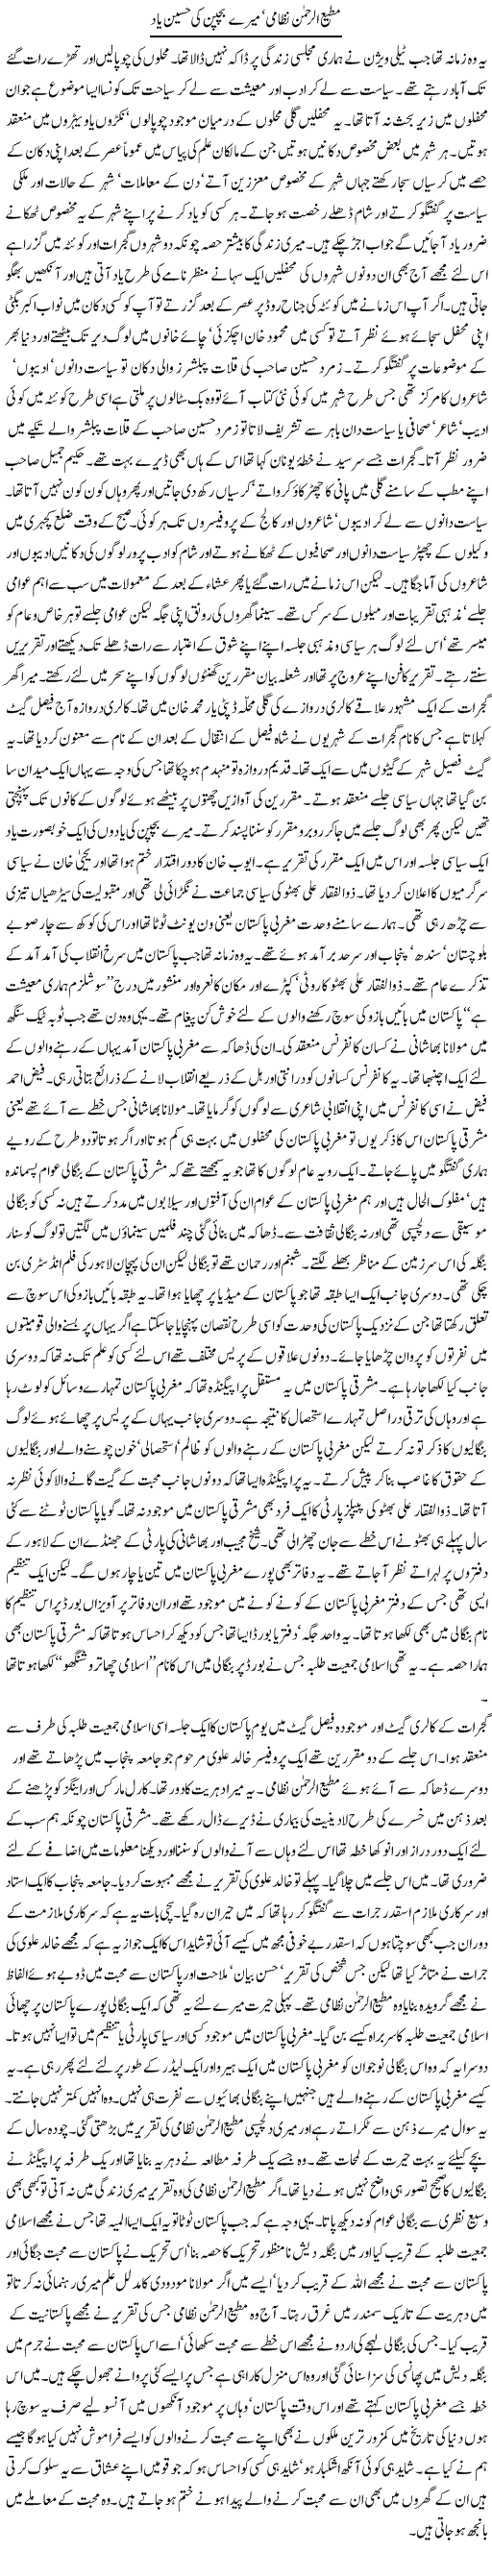 Motiur Rahman Nizami, mere bachpan ki haseen yaad | Orya Maqbool Jan | Daily Urdu Columns